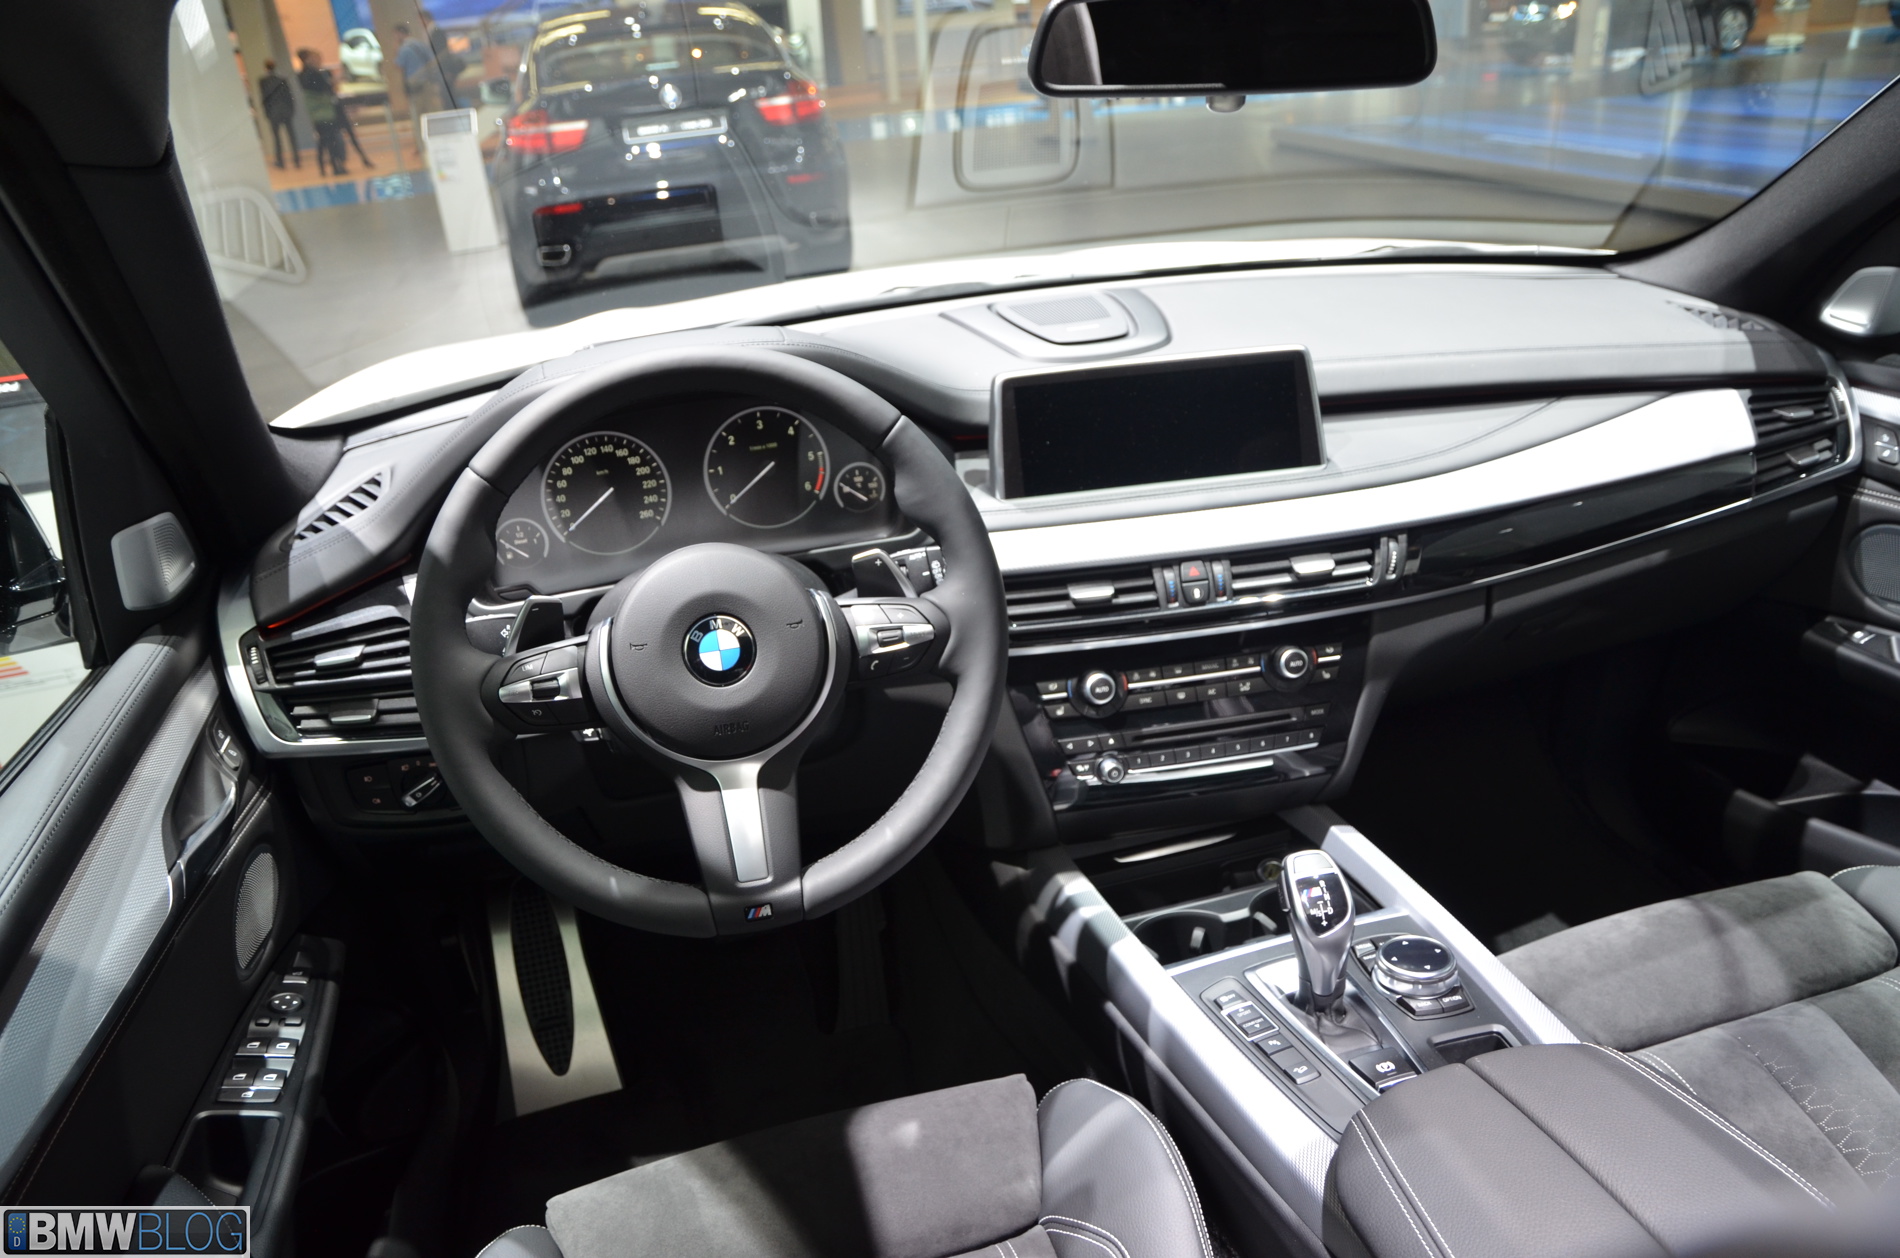 2014 BMW X5 M50d Pics, Vehicles Collection